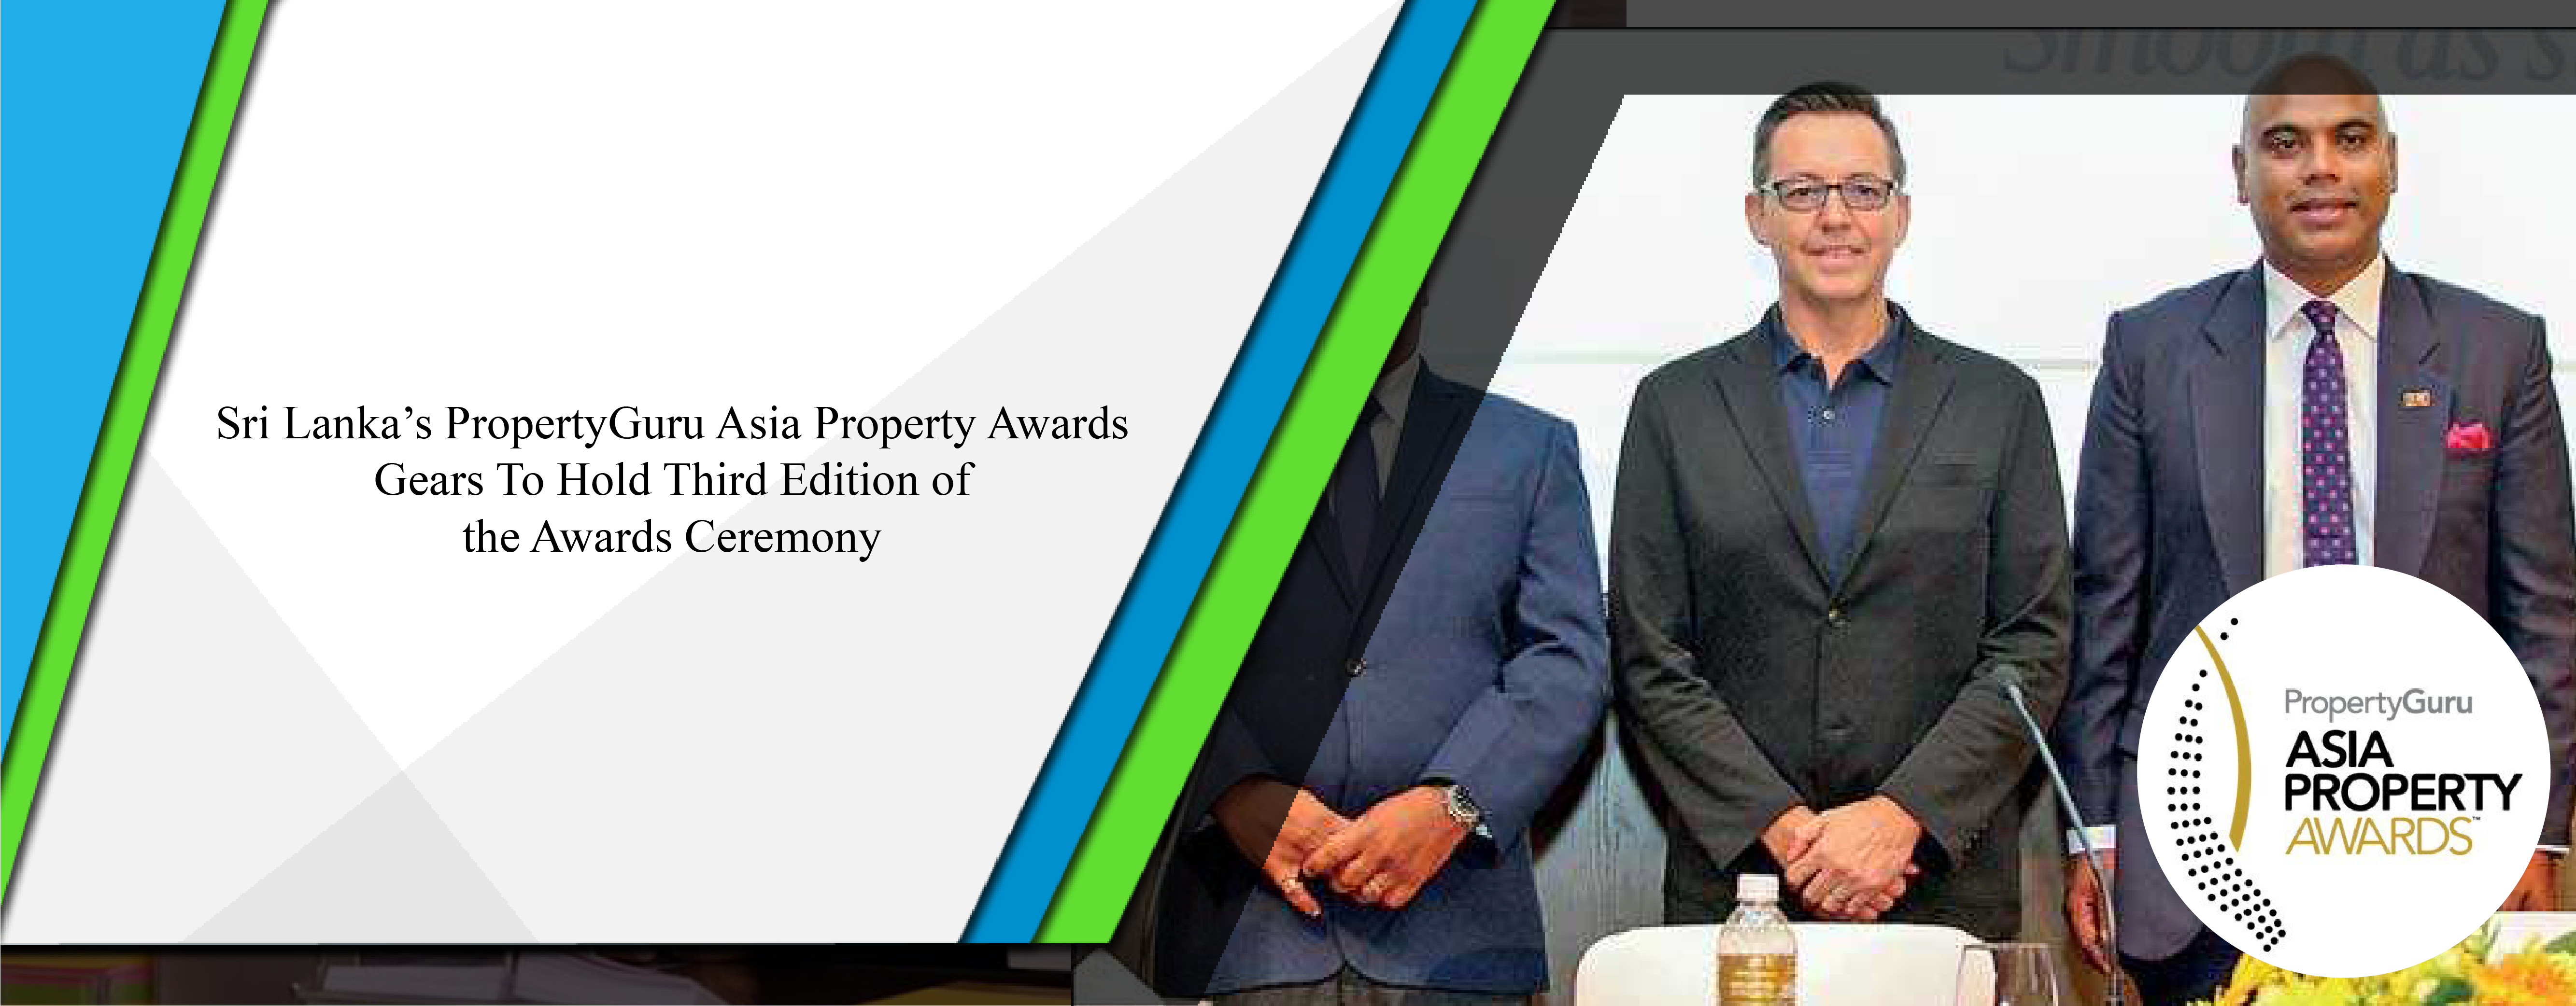 Sri Lanka’s PropertyGuru Asia Property Awards gears to hold third edition of the awards ceremony